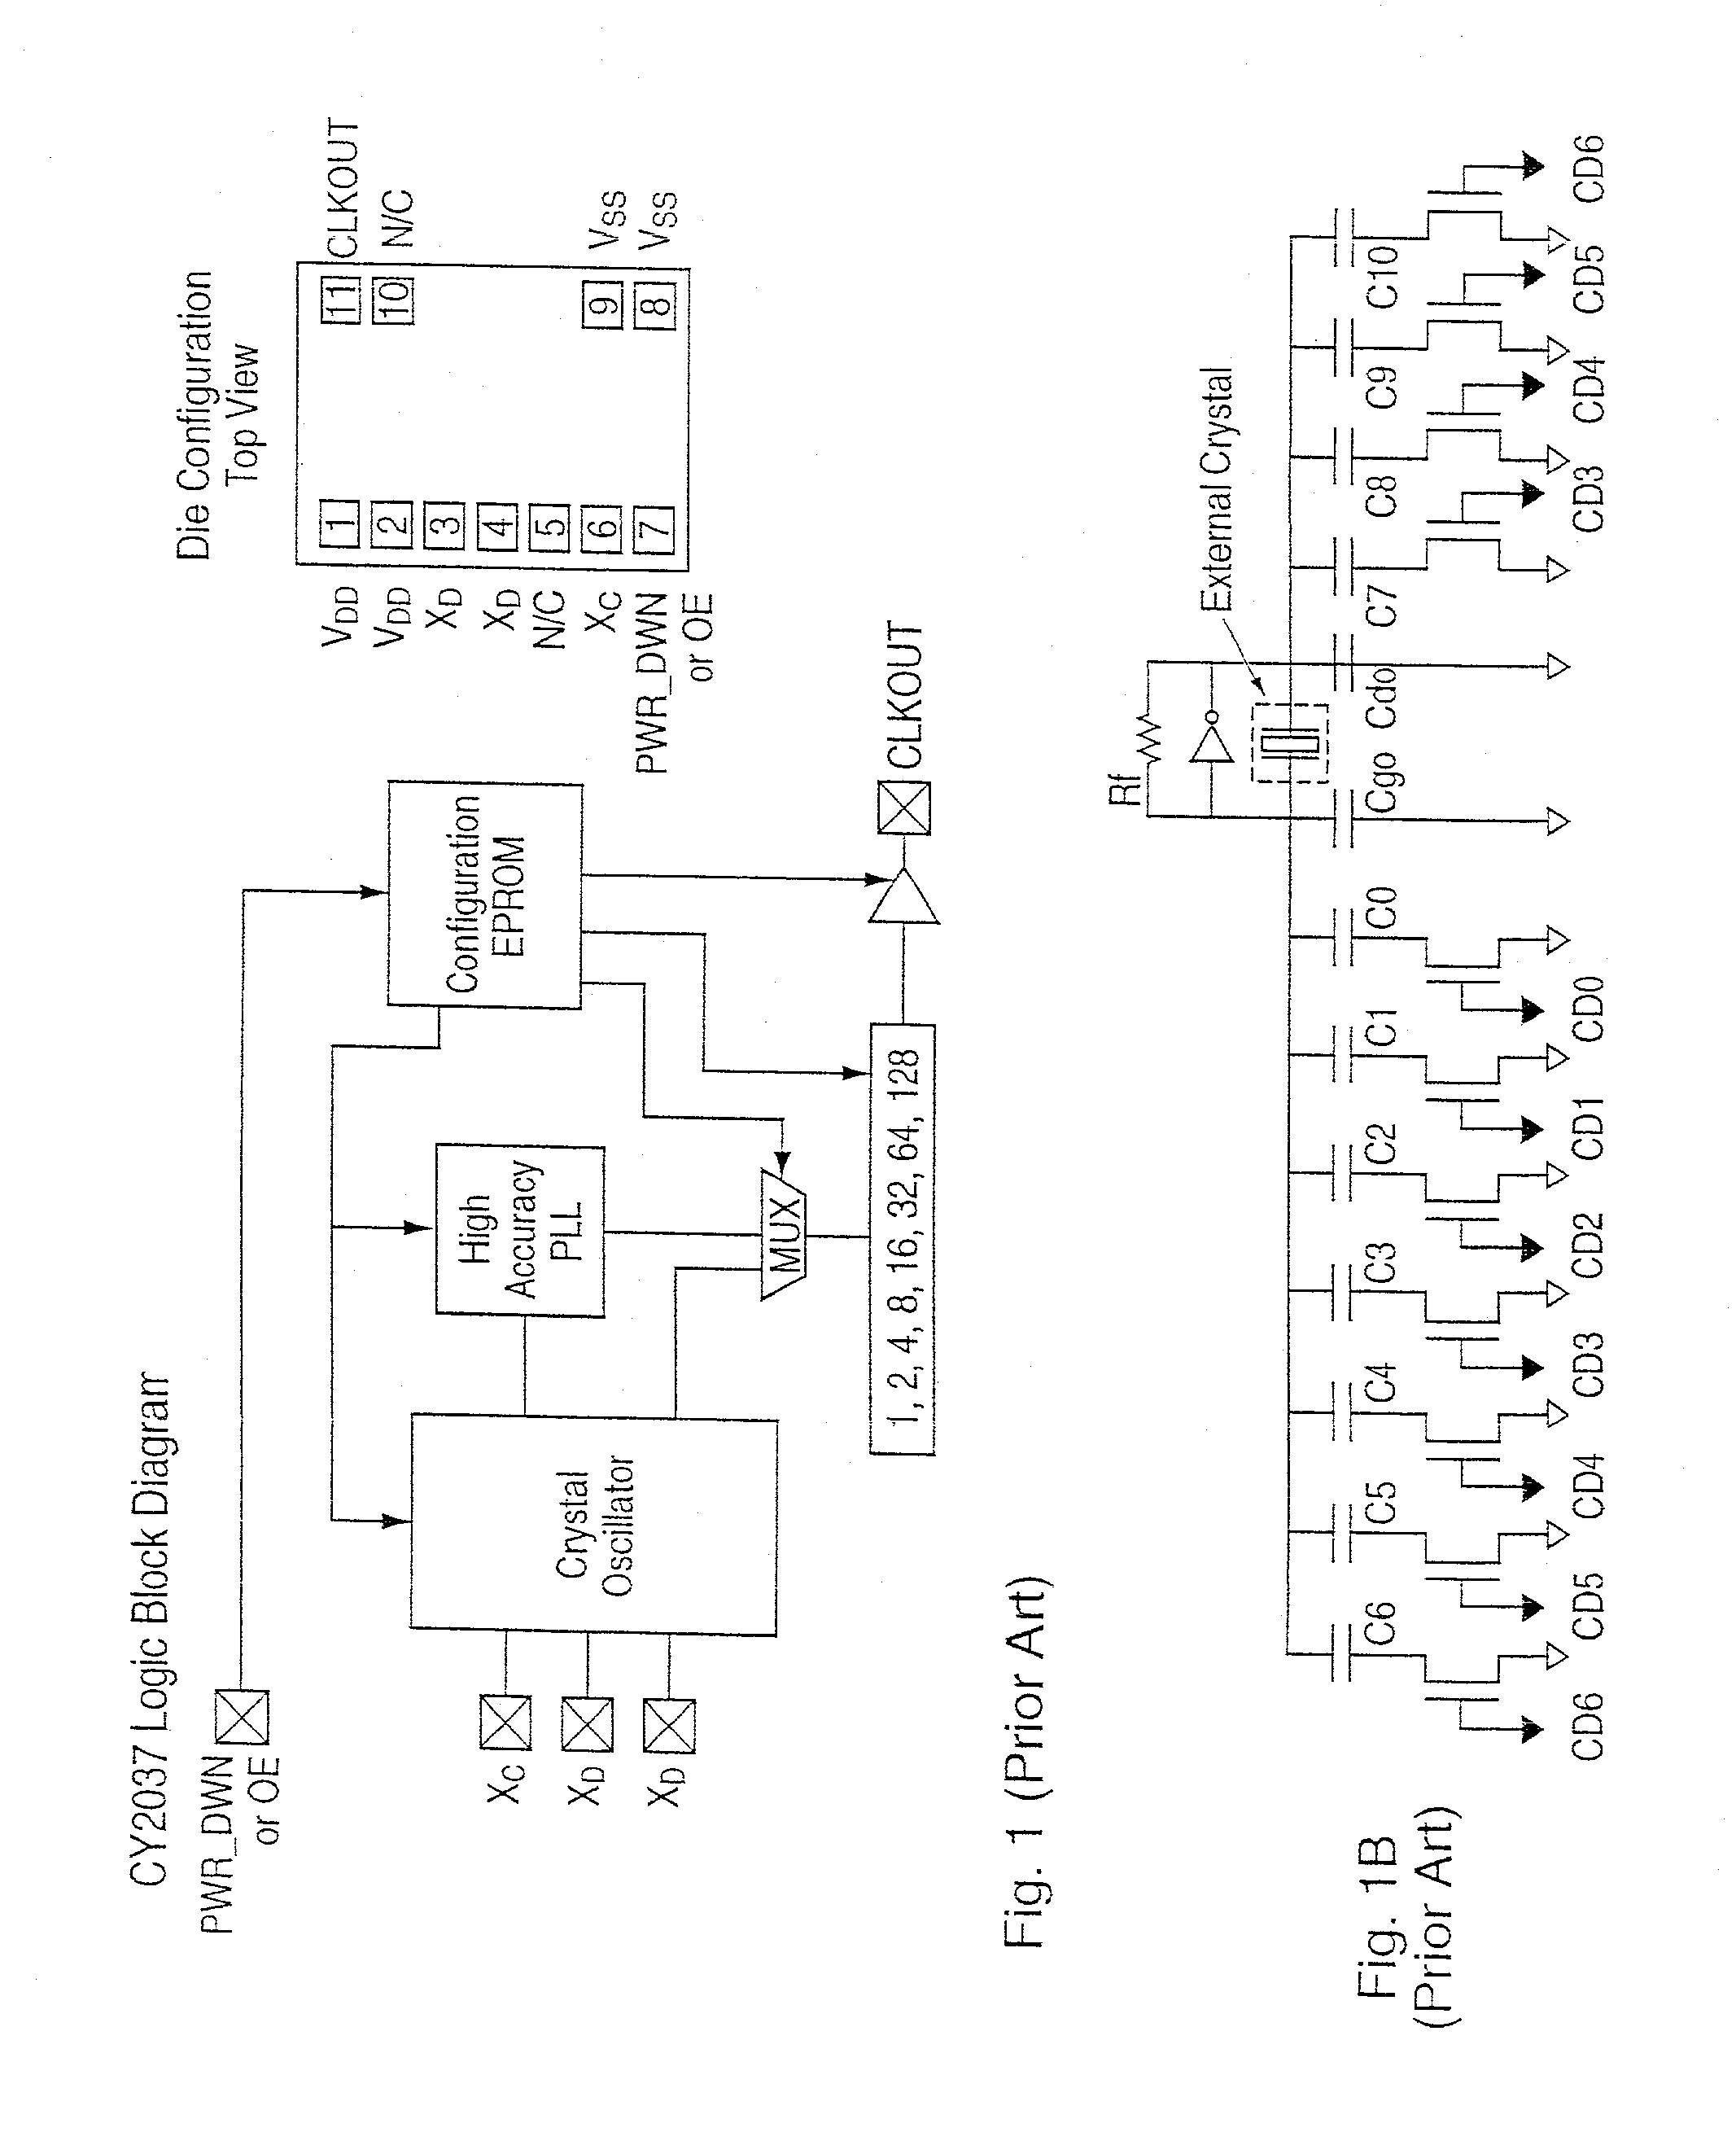 System and method for programming oscillators